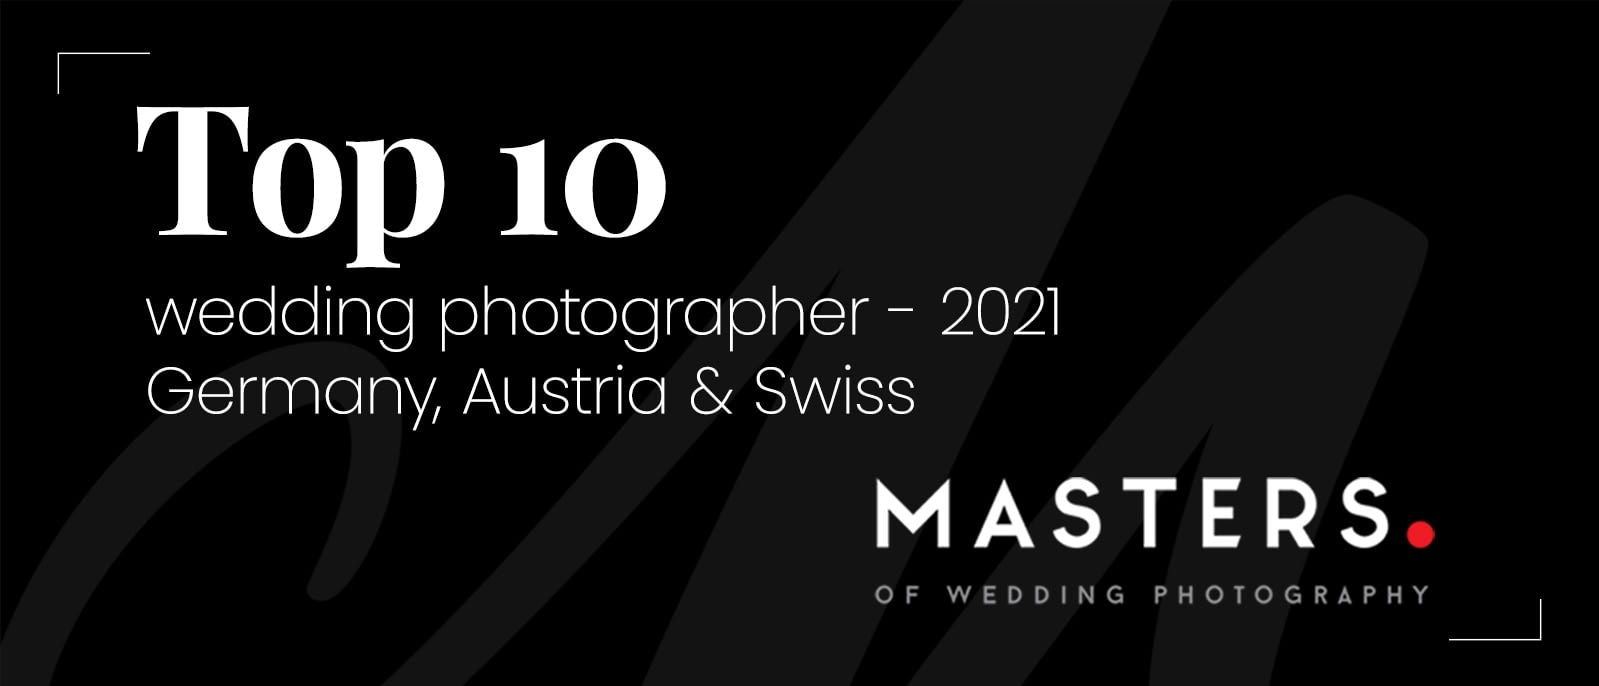 Top 10 Hochzeitsfotografin 2021 - Master of Wedding Photography Awards